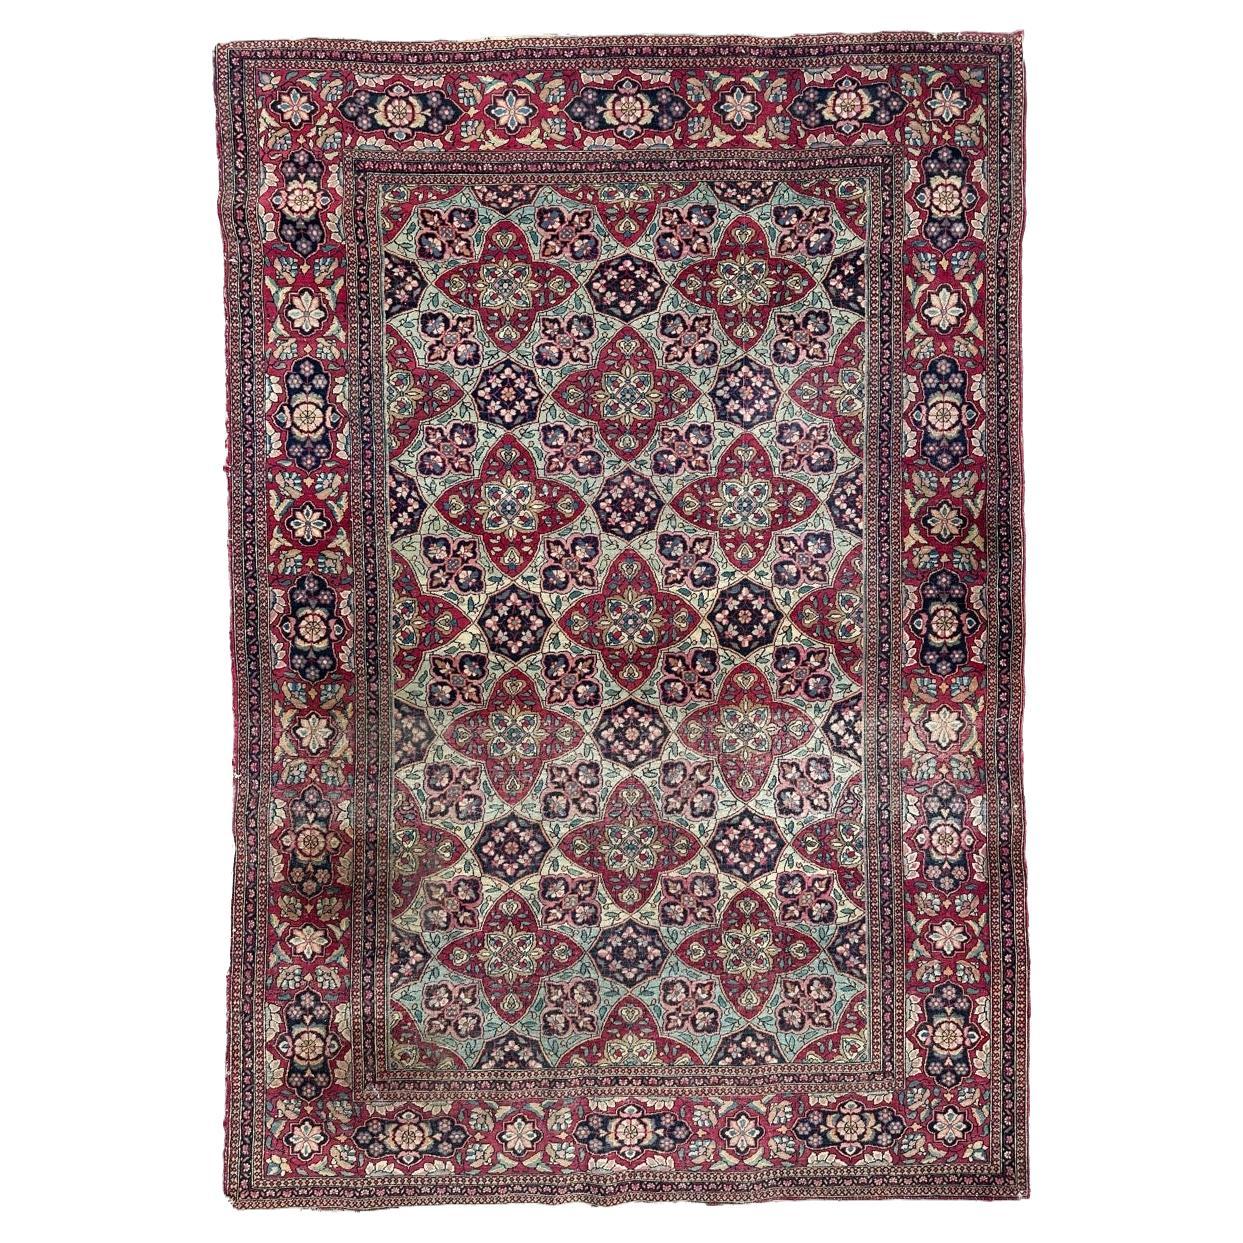 Bobyrug’s pretty antique fine Tehran rug 